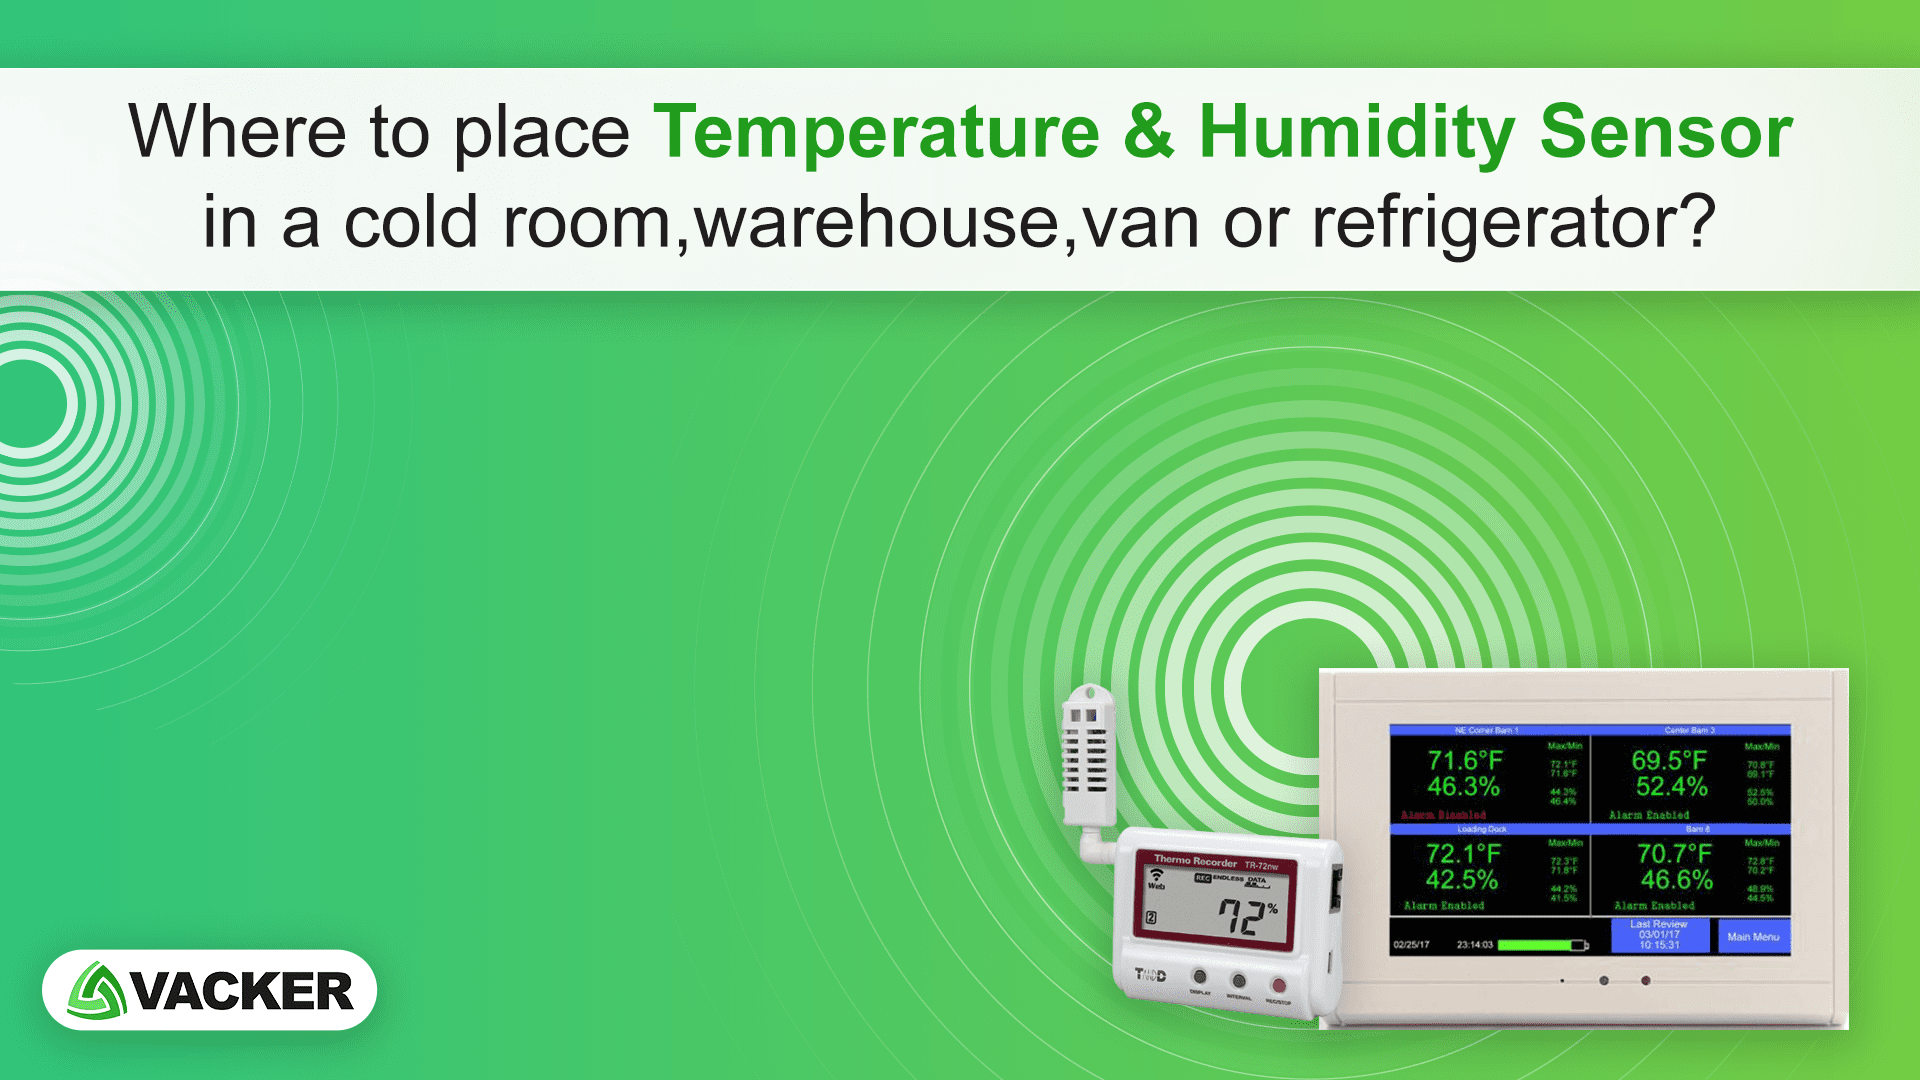 https://www.temperaturemonitoringuae.com/wp-content/uploads/2016/03/Location-to-place-temperature-humidity-sensor.png